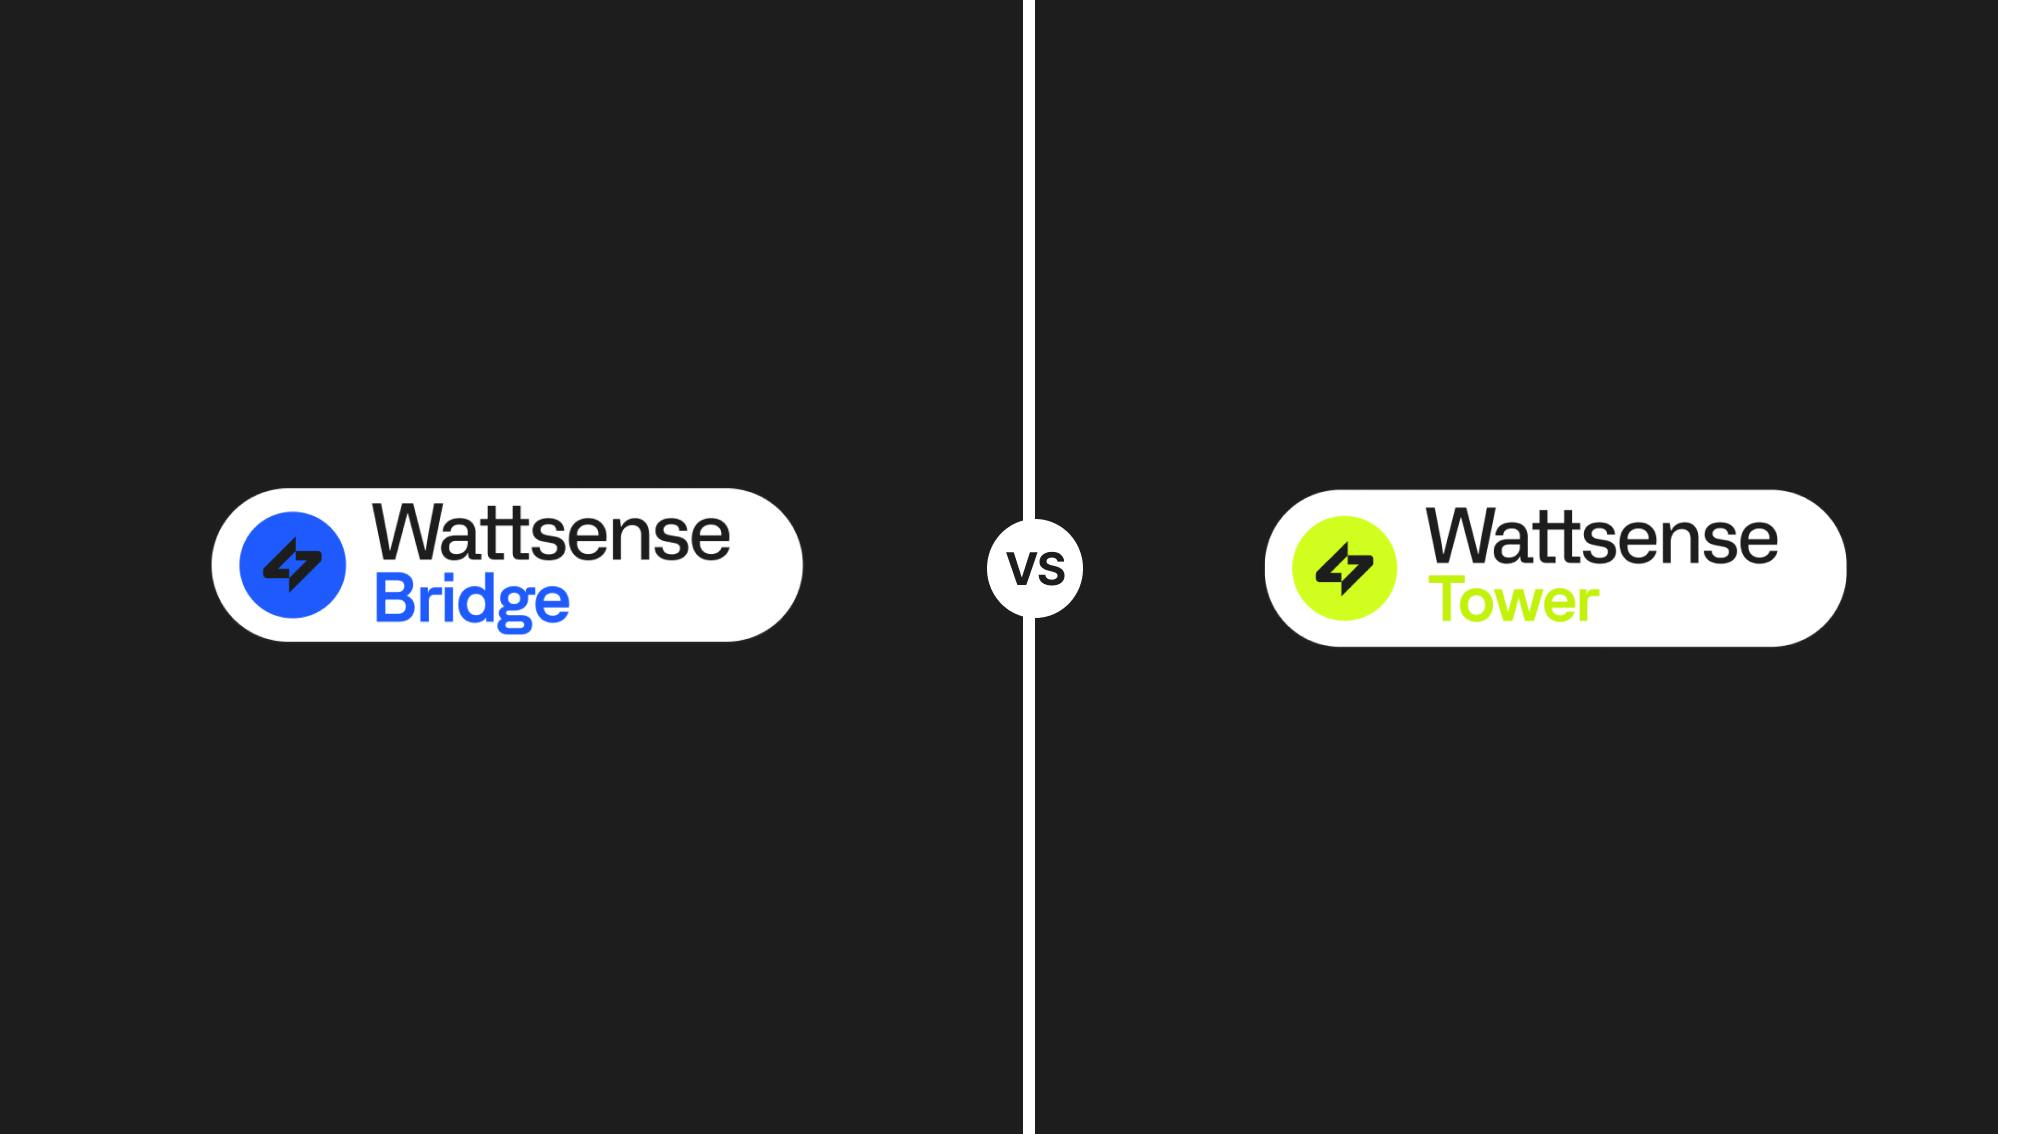 Comparaison des produits Wattsense : Bridge vs Tower